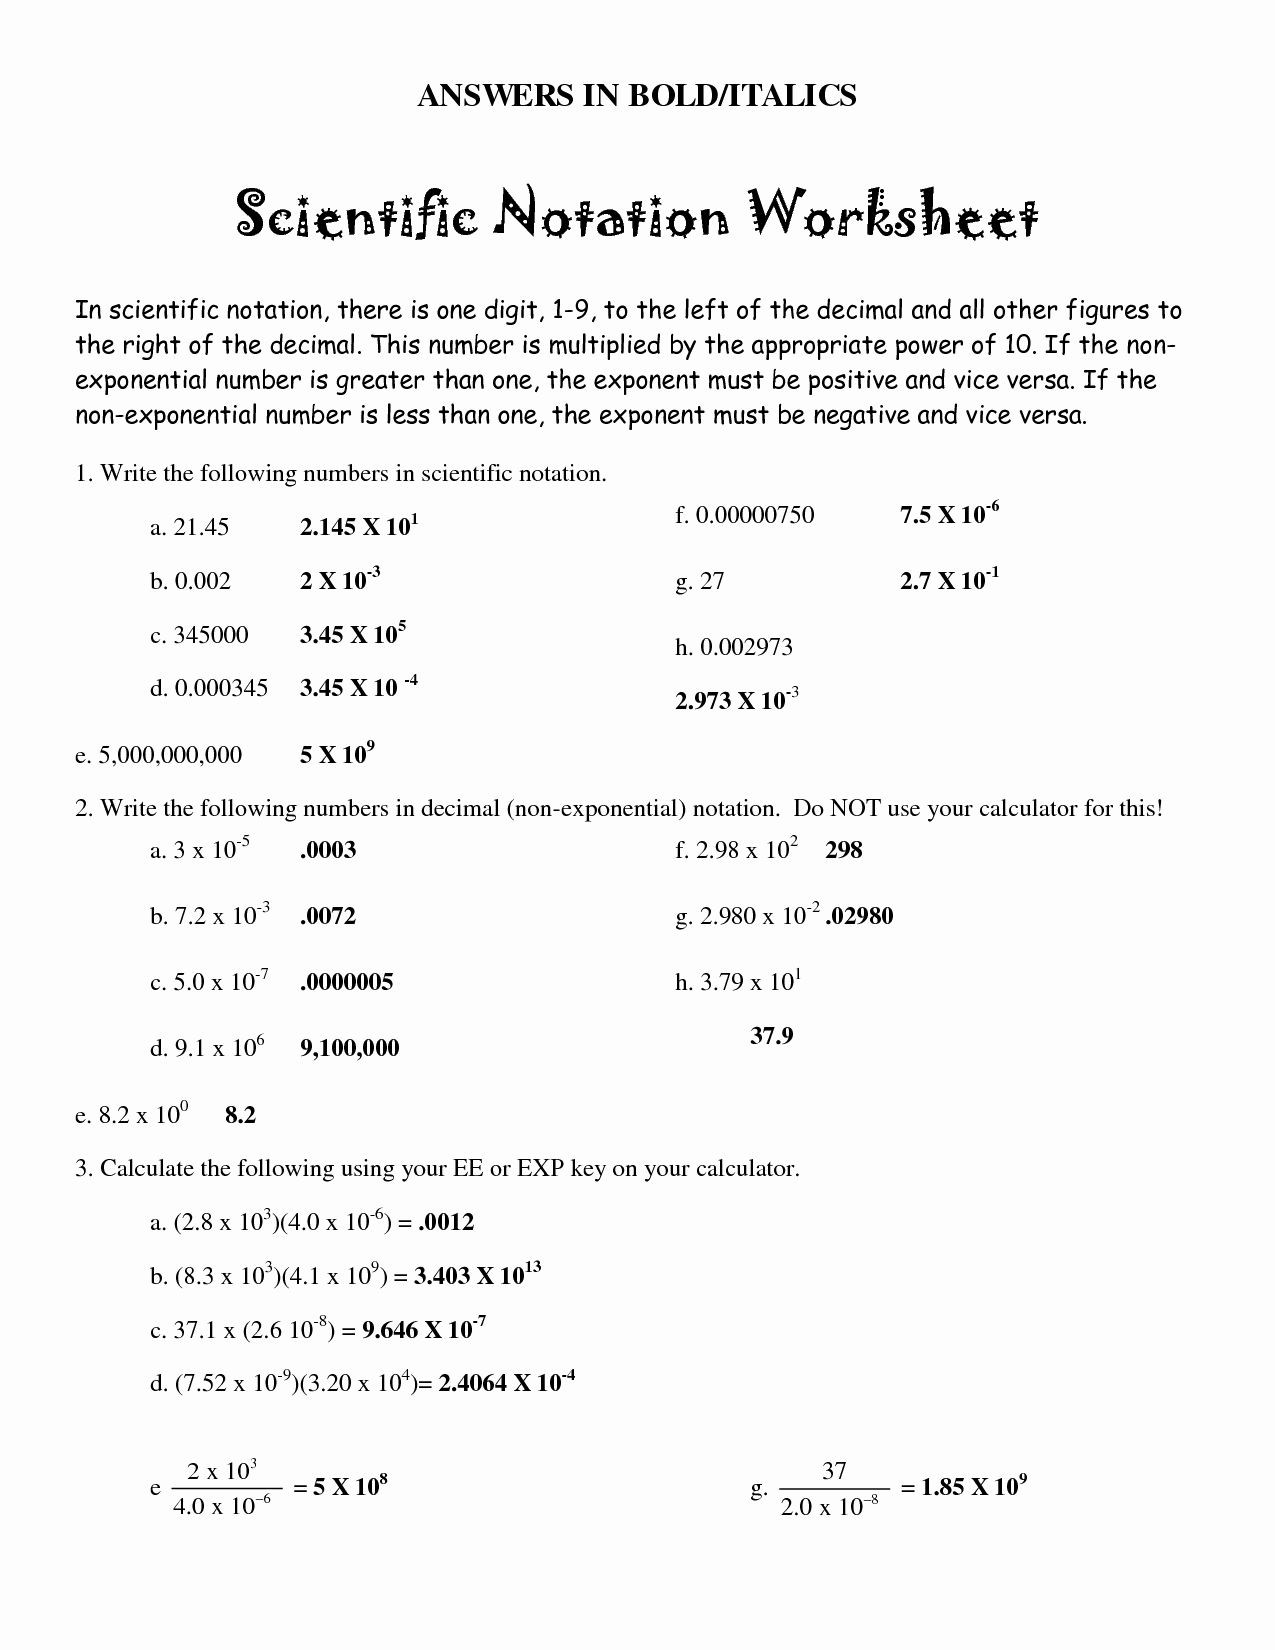 Scientific Notation Worksheet Chemistry Scientific Notation Worksheet with Answers Best 14 Best